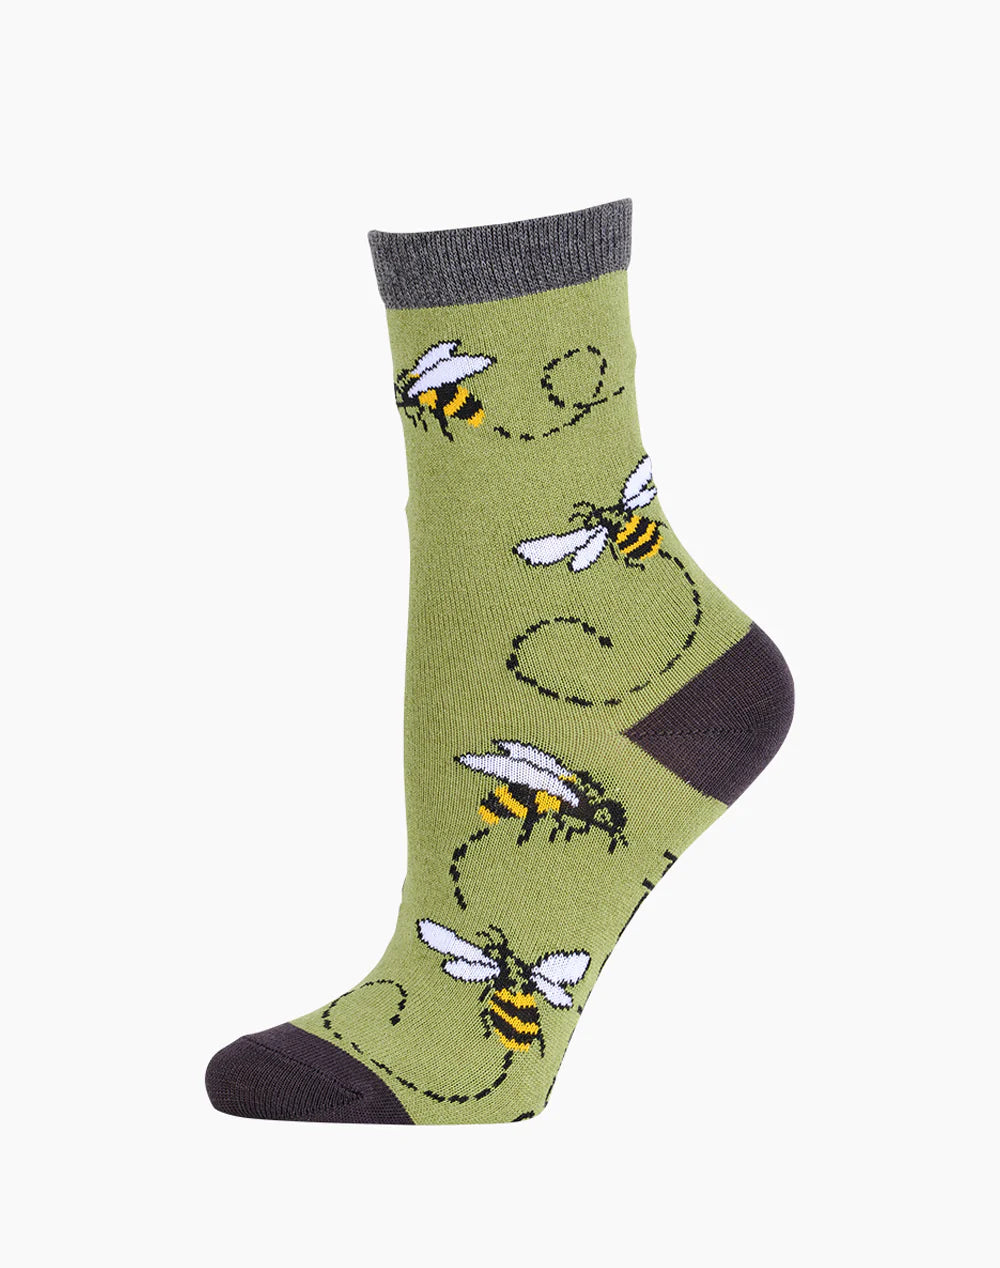 Buzzing Bee Kids Sock (Aged 6-8 Yrs) - The Sockery